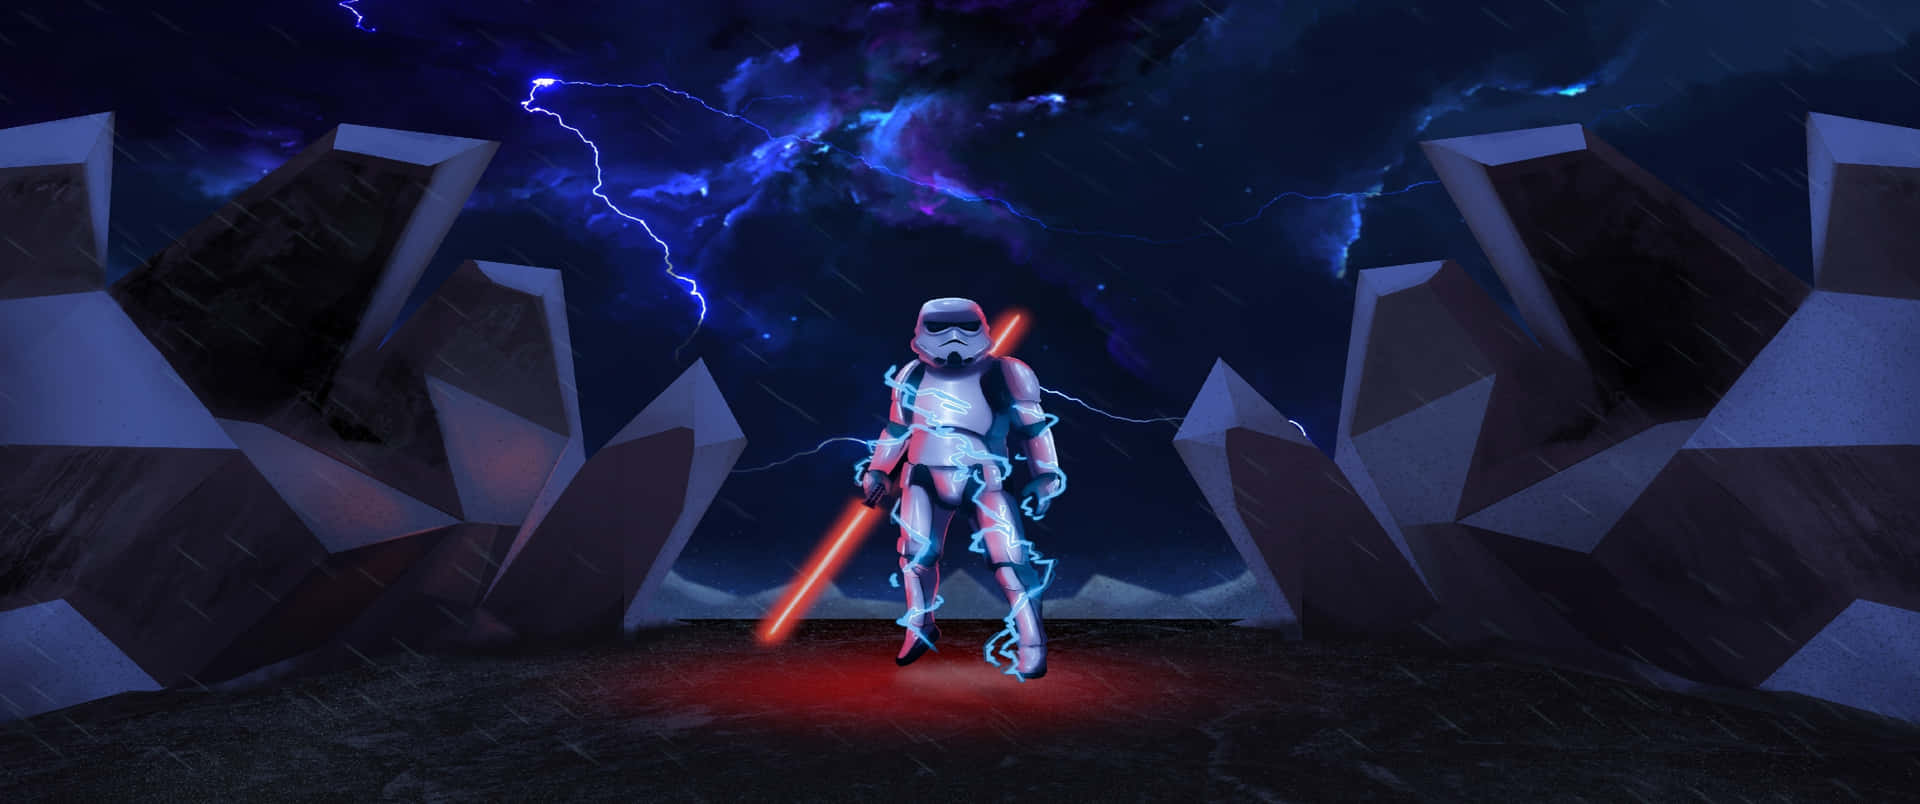 Stormtrooper_with_ Lightsaber_ Ultra_ Wide Wallpaper